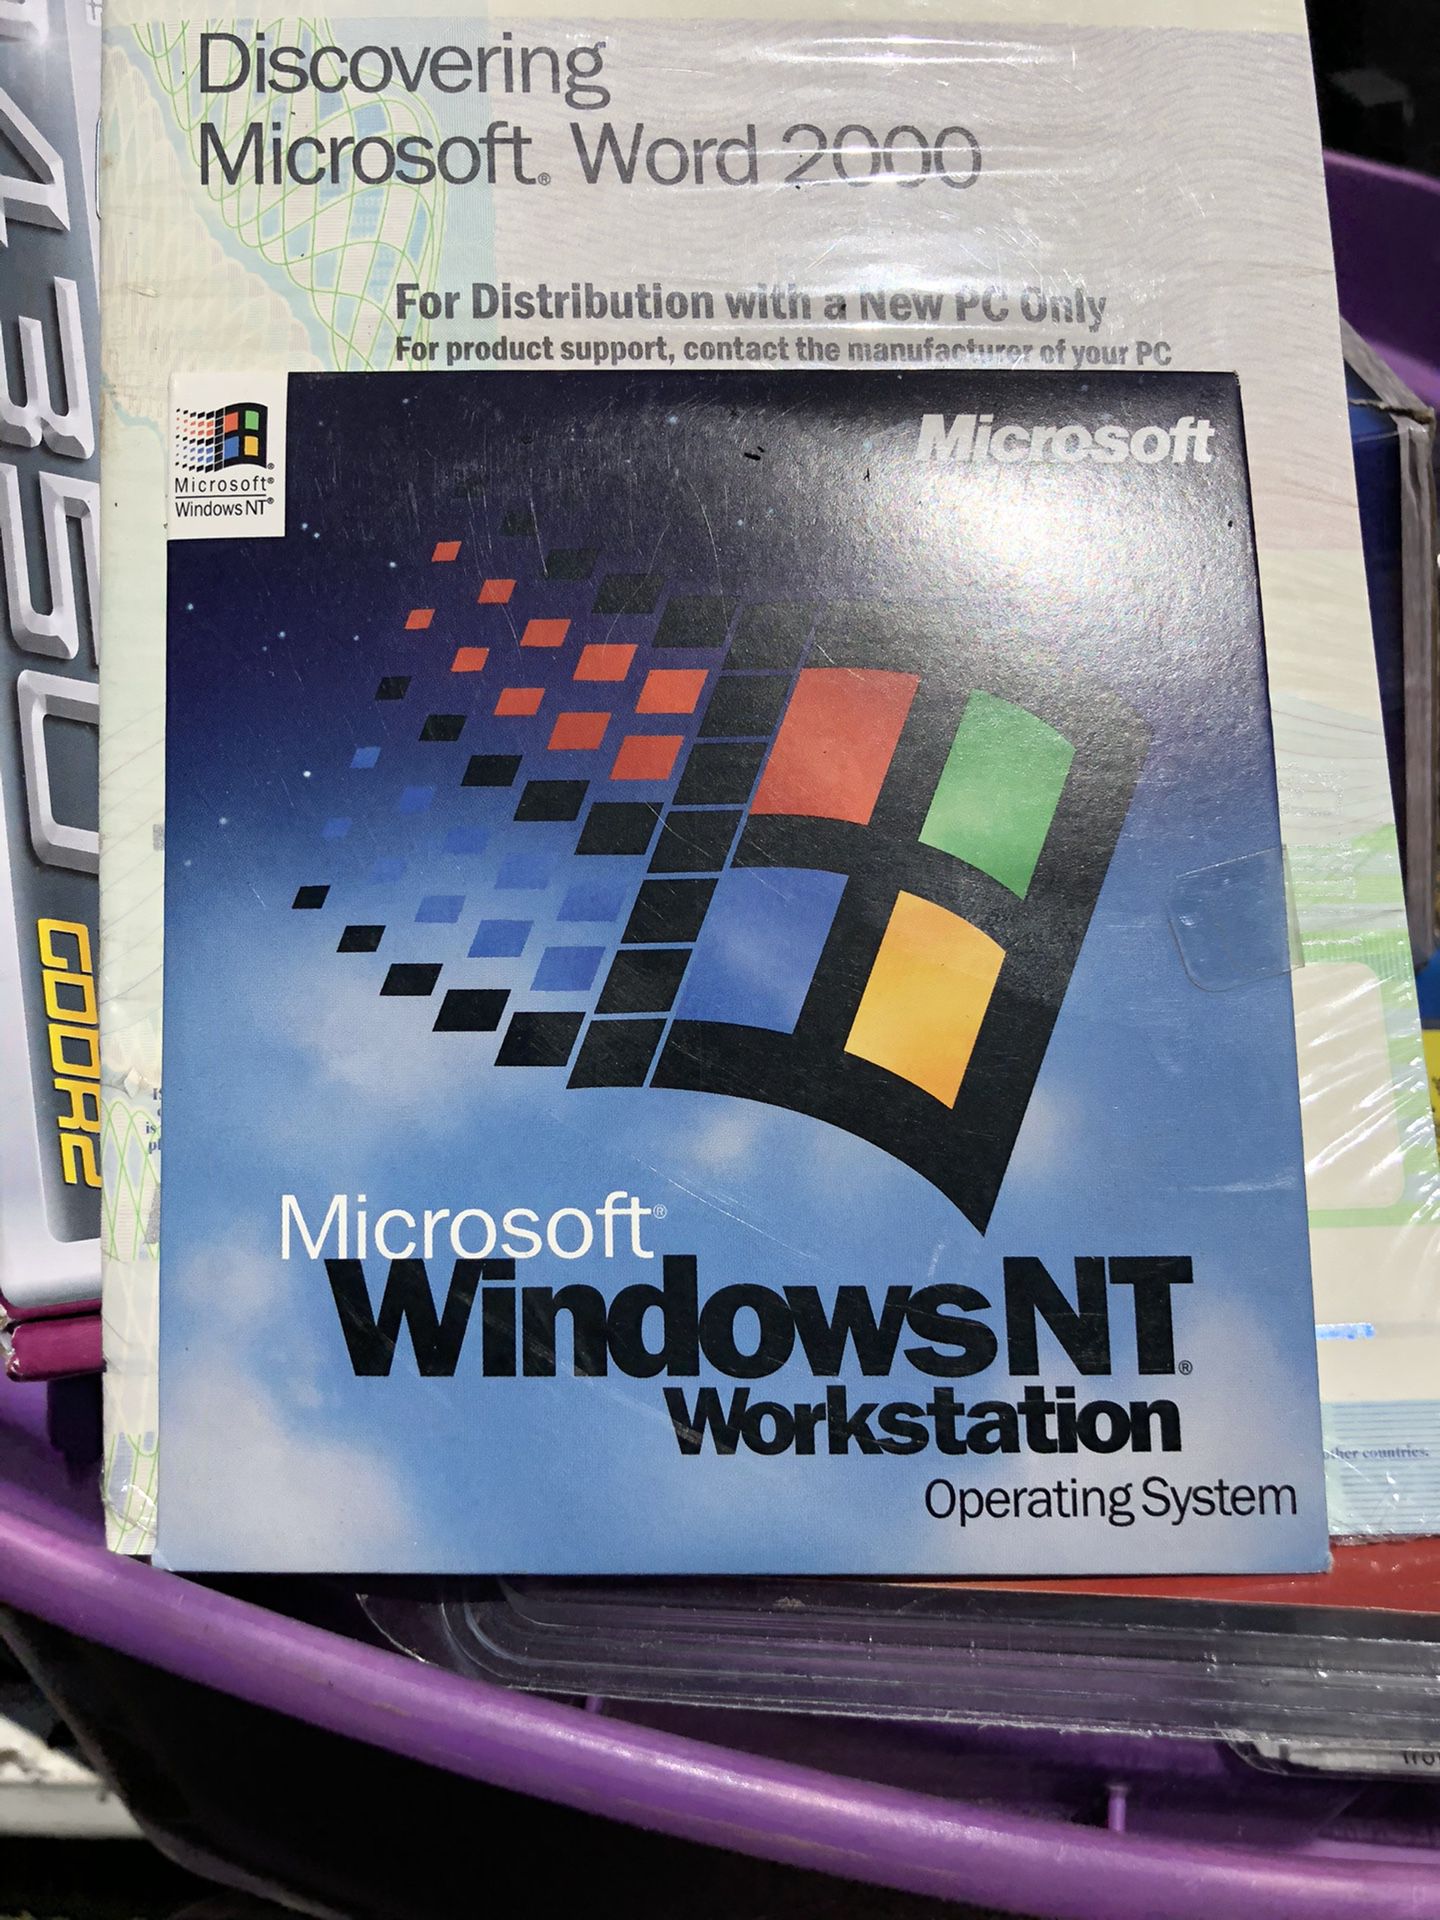 Microsoft Windows NY workstation